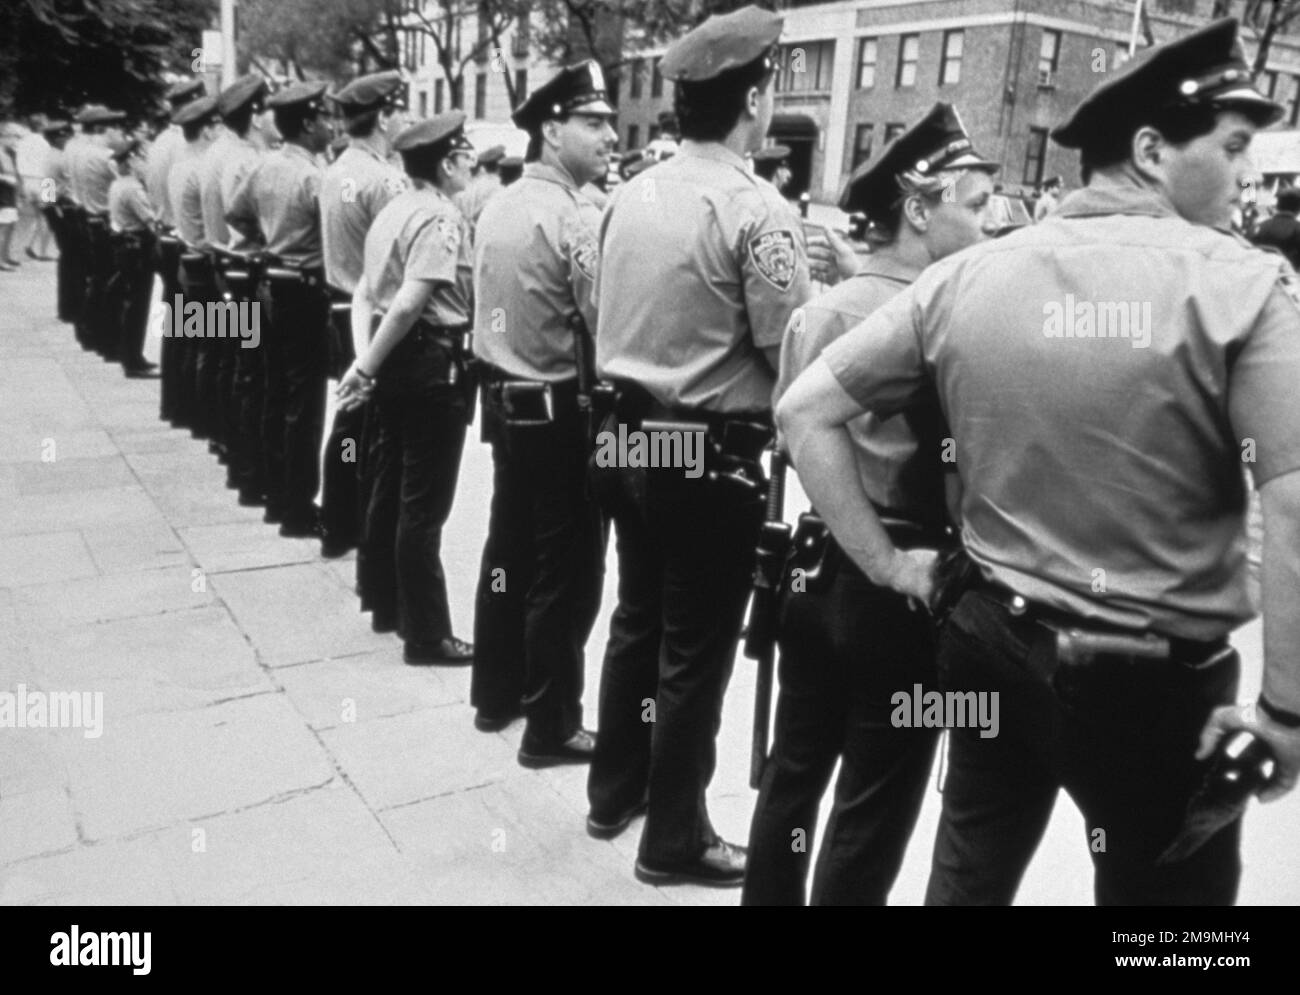 Usa police uniform Black and White Stock Photos & Images - Alamy